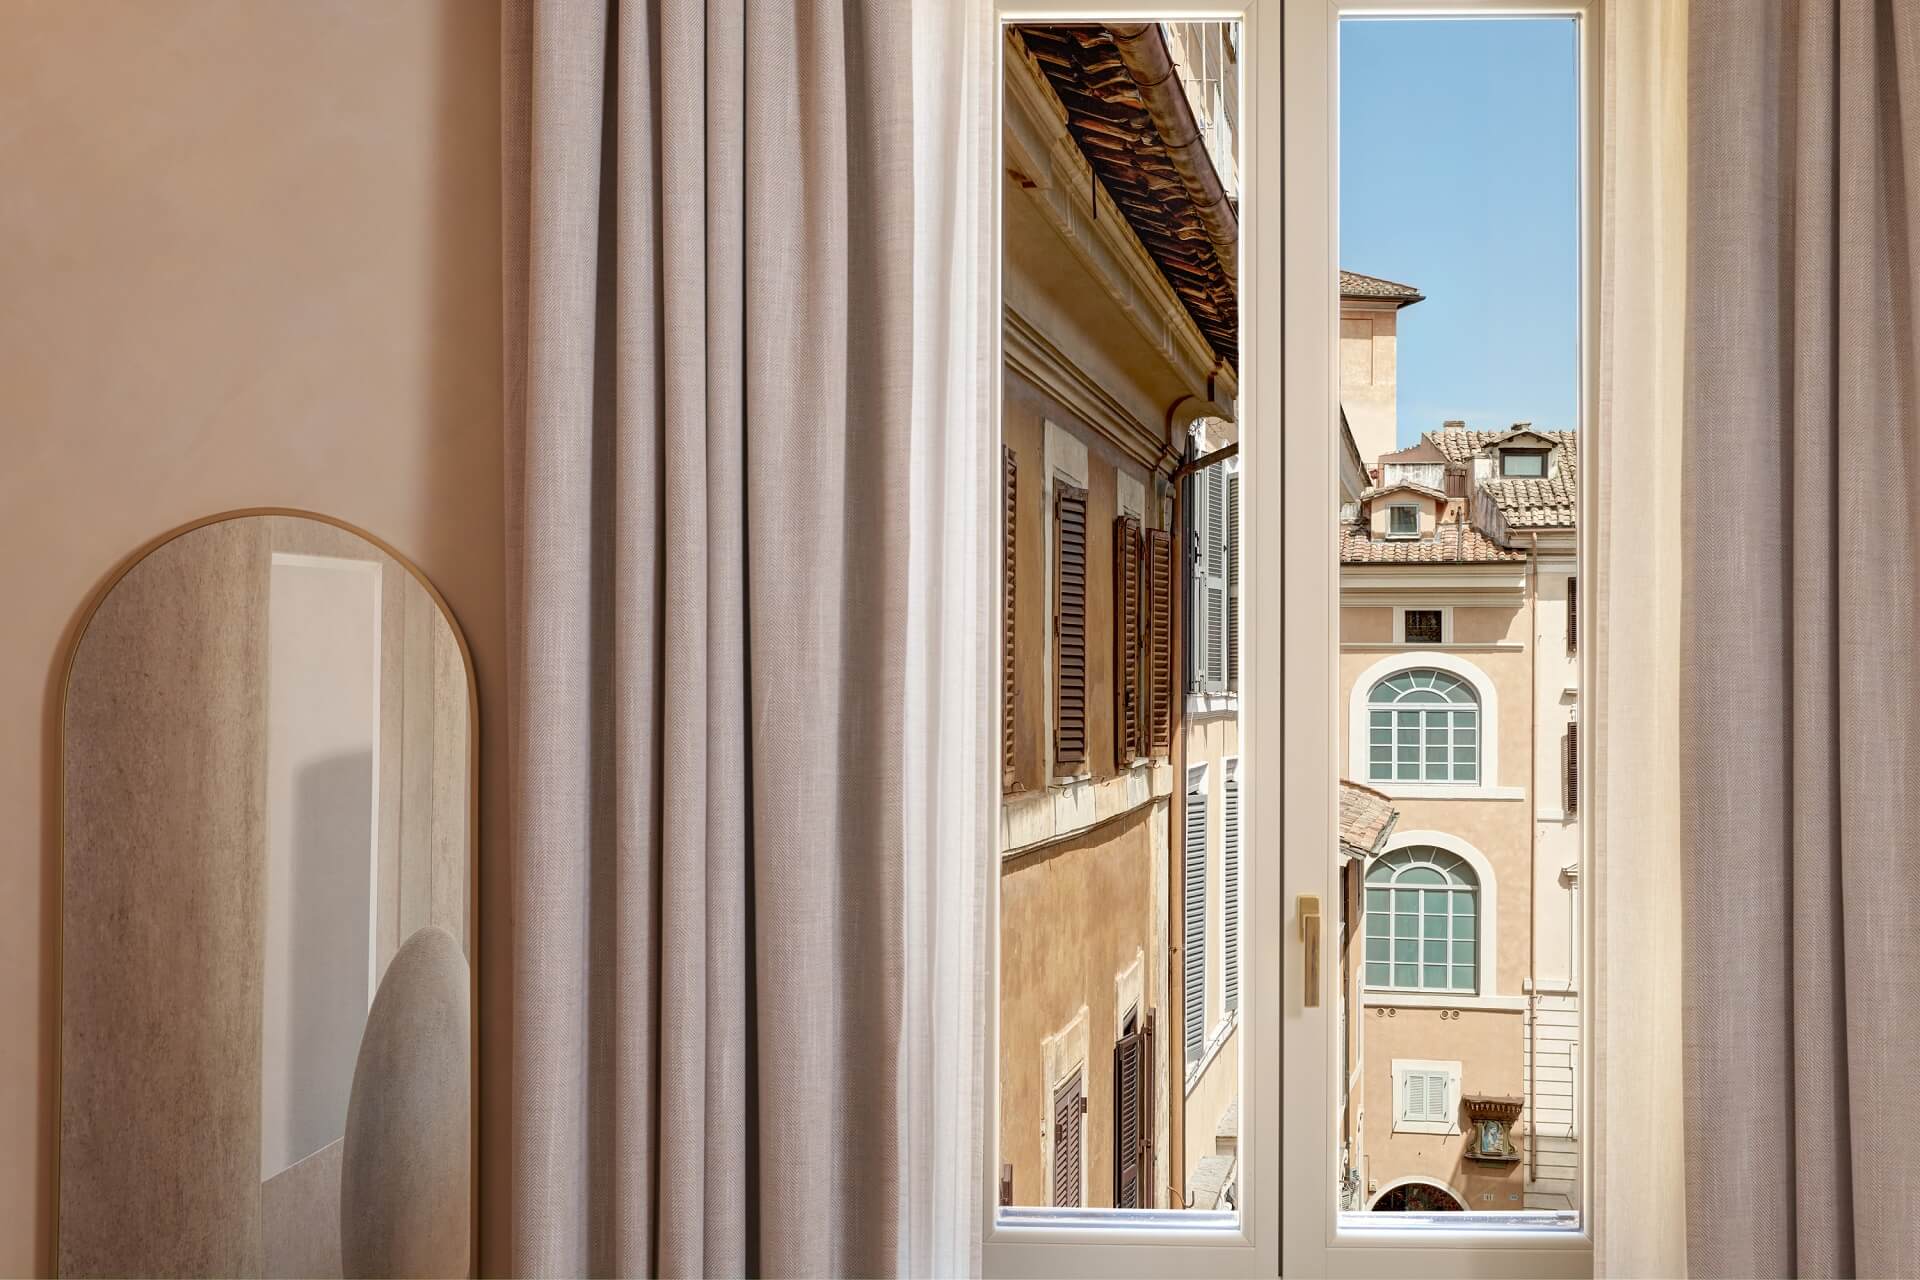 Borghese Contemporary Hotel